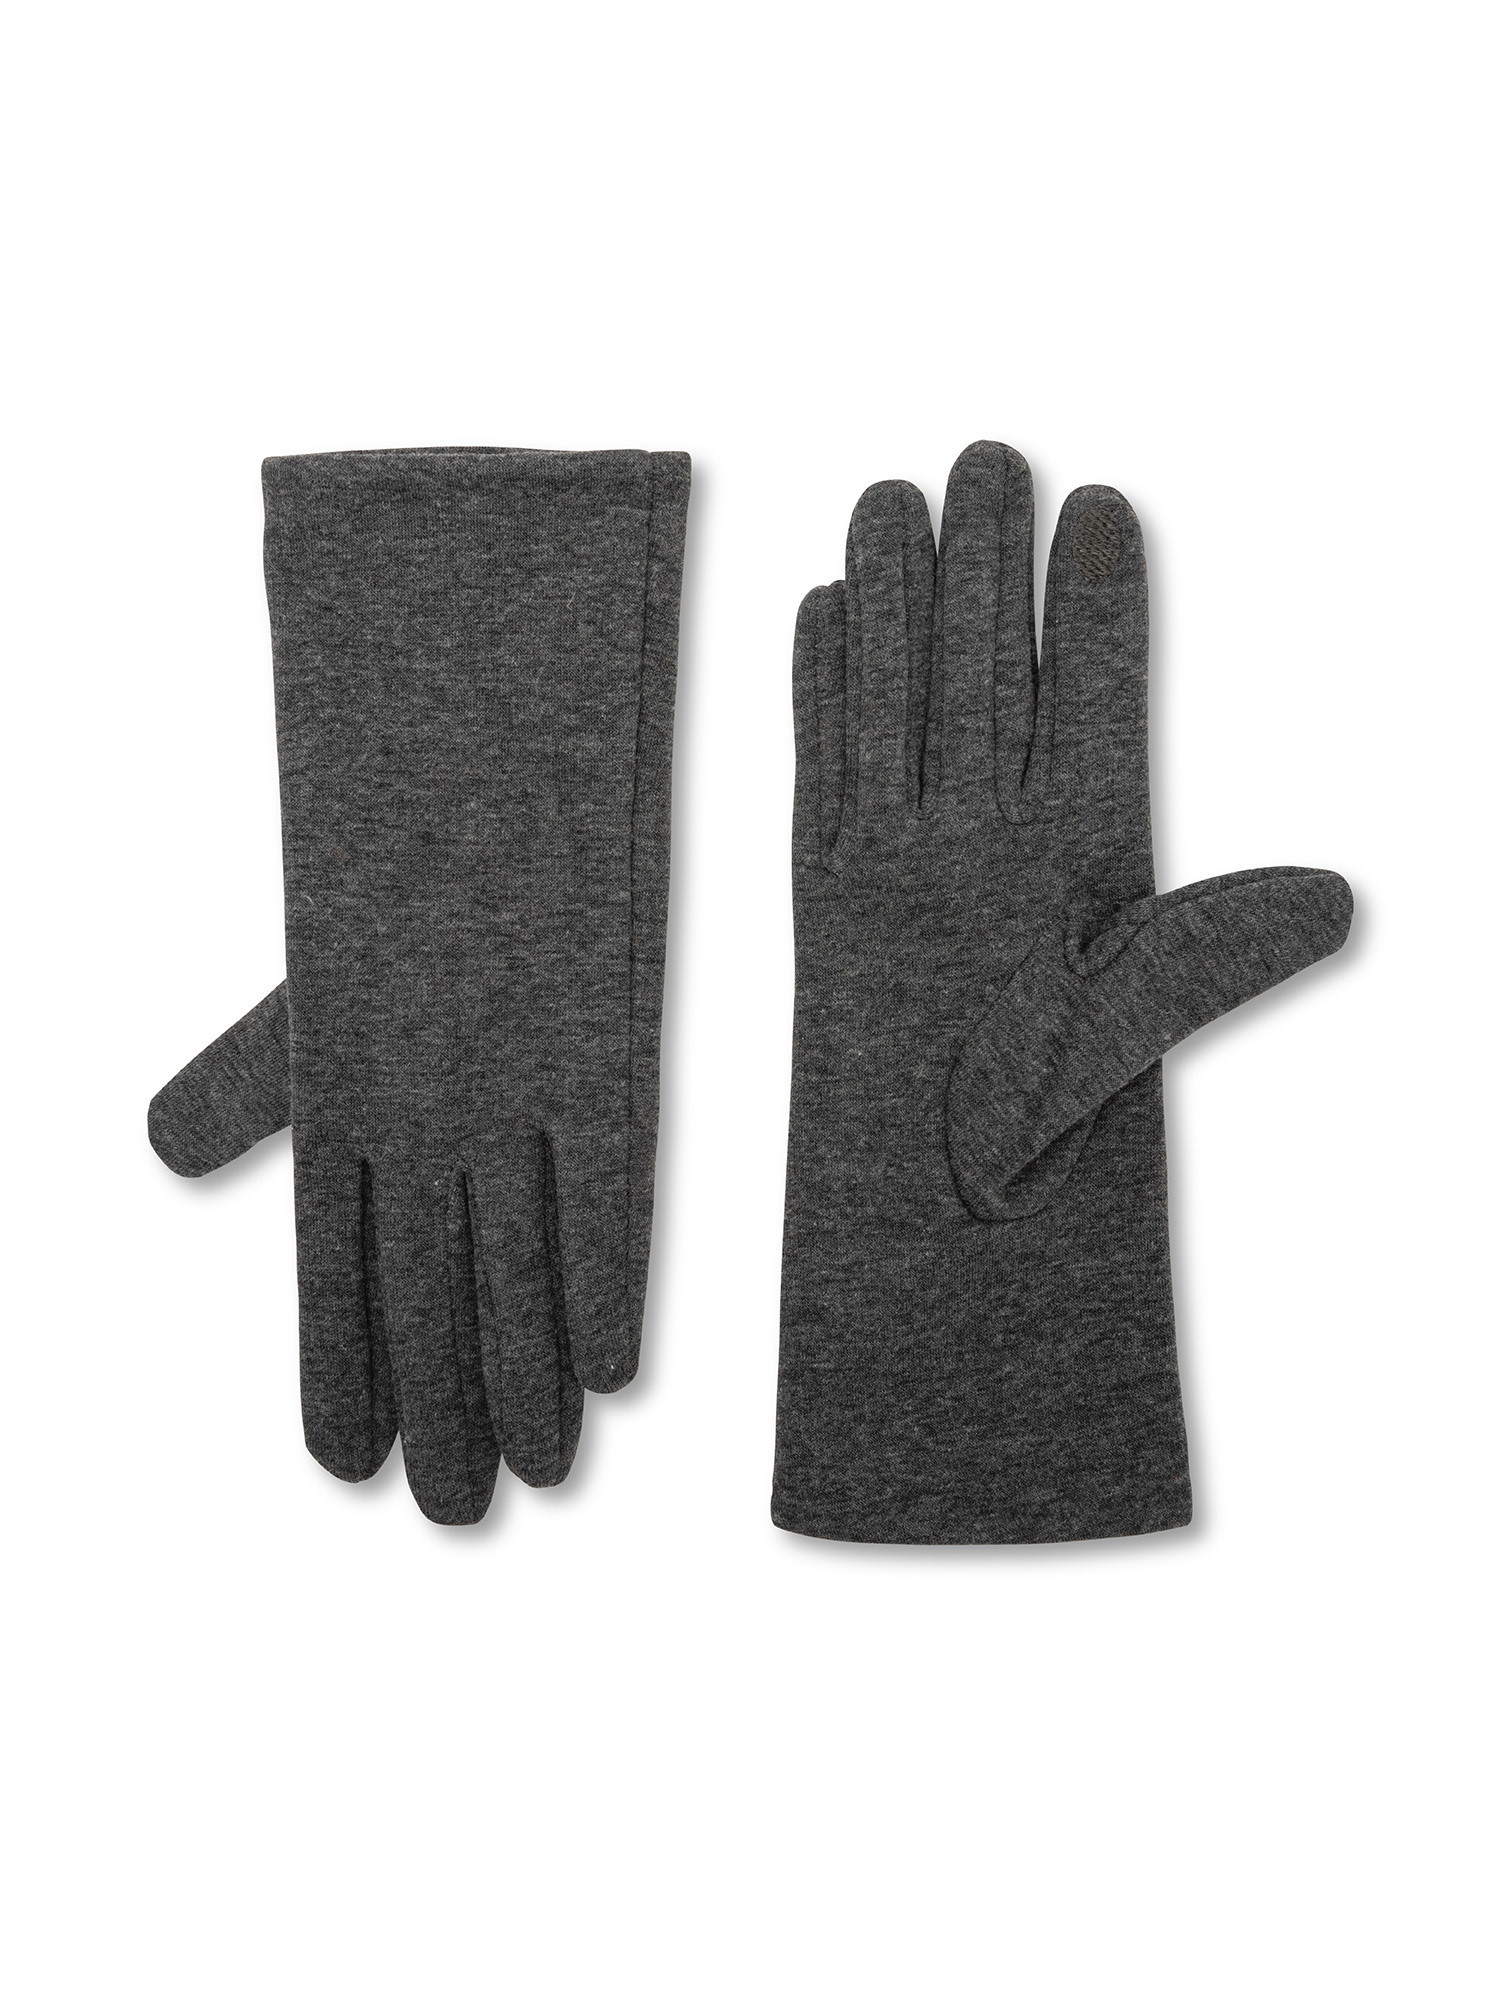 Koan - Jersey gloves, Grey, large image number 0